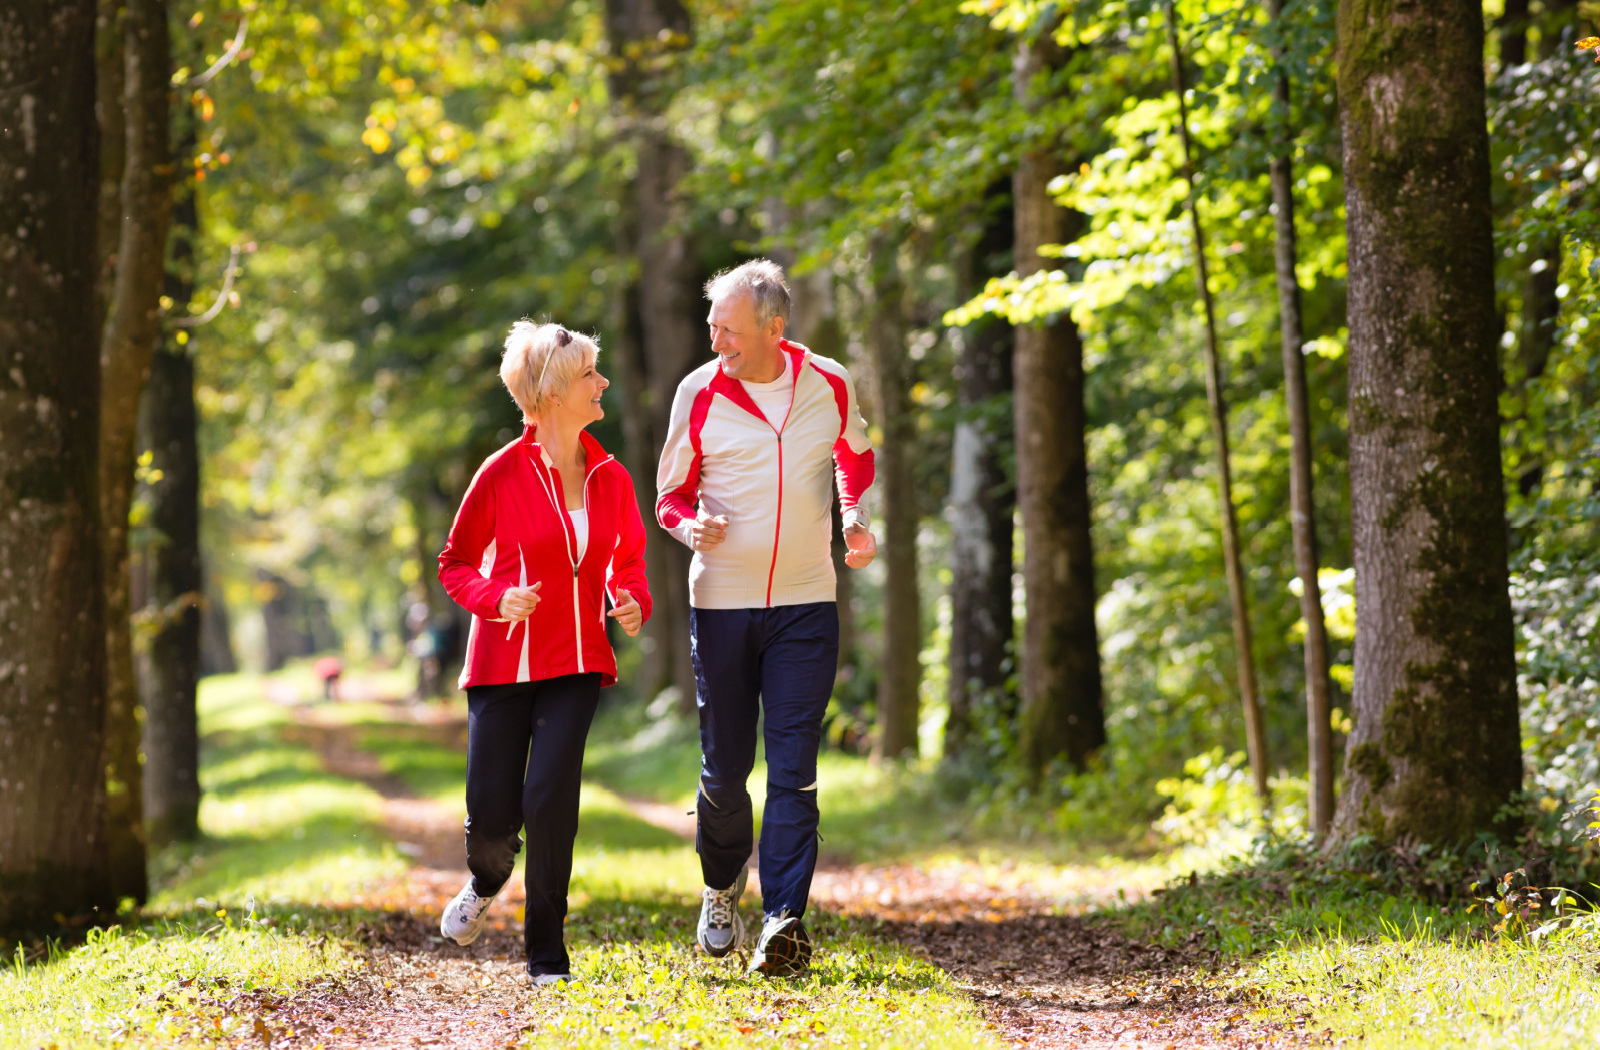 An older adult couple jogging together along a park trail.